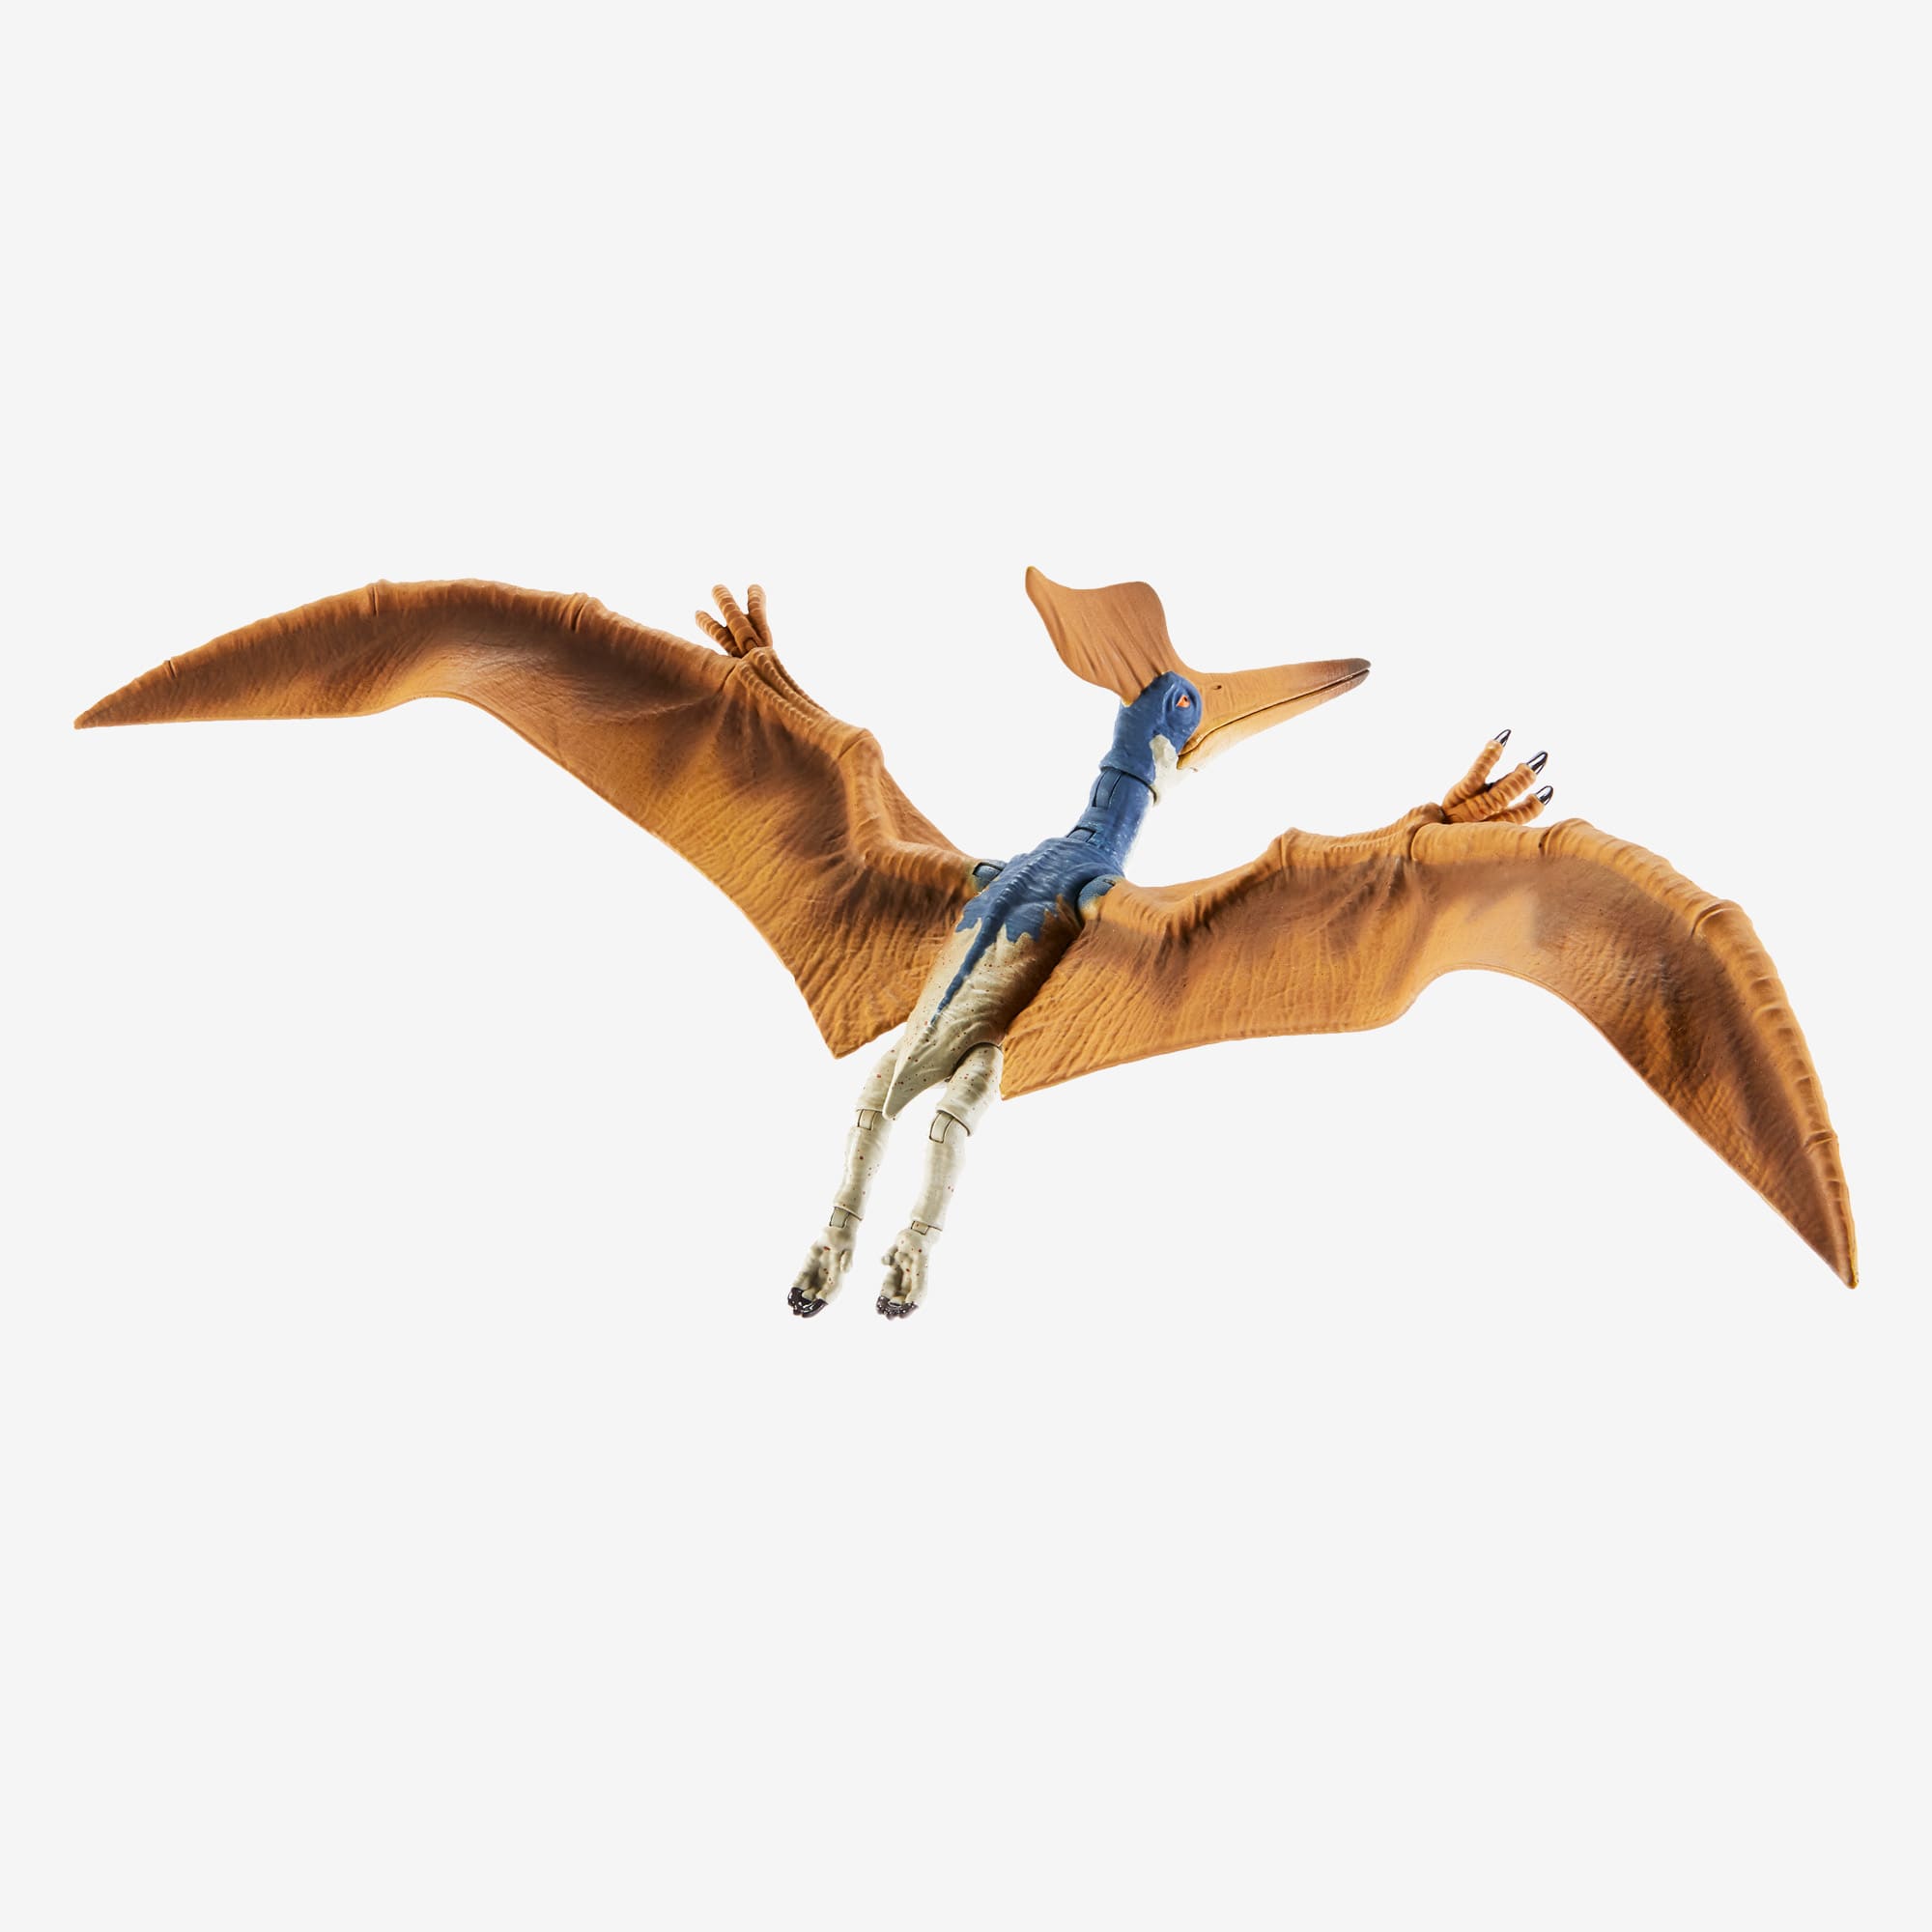 Pteranodon (The Lost World, Jurassic Park 3, Jurassic World)